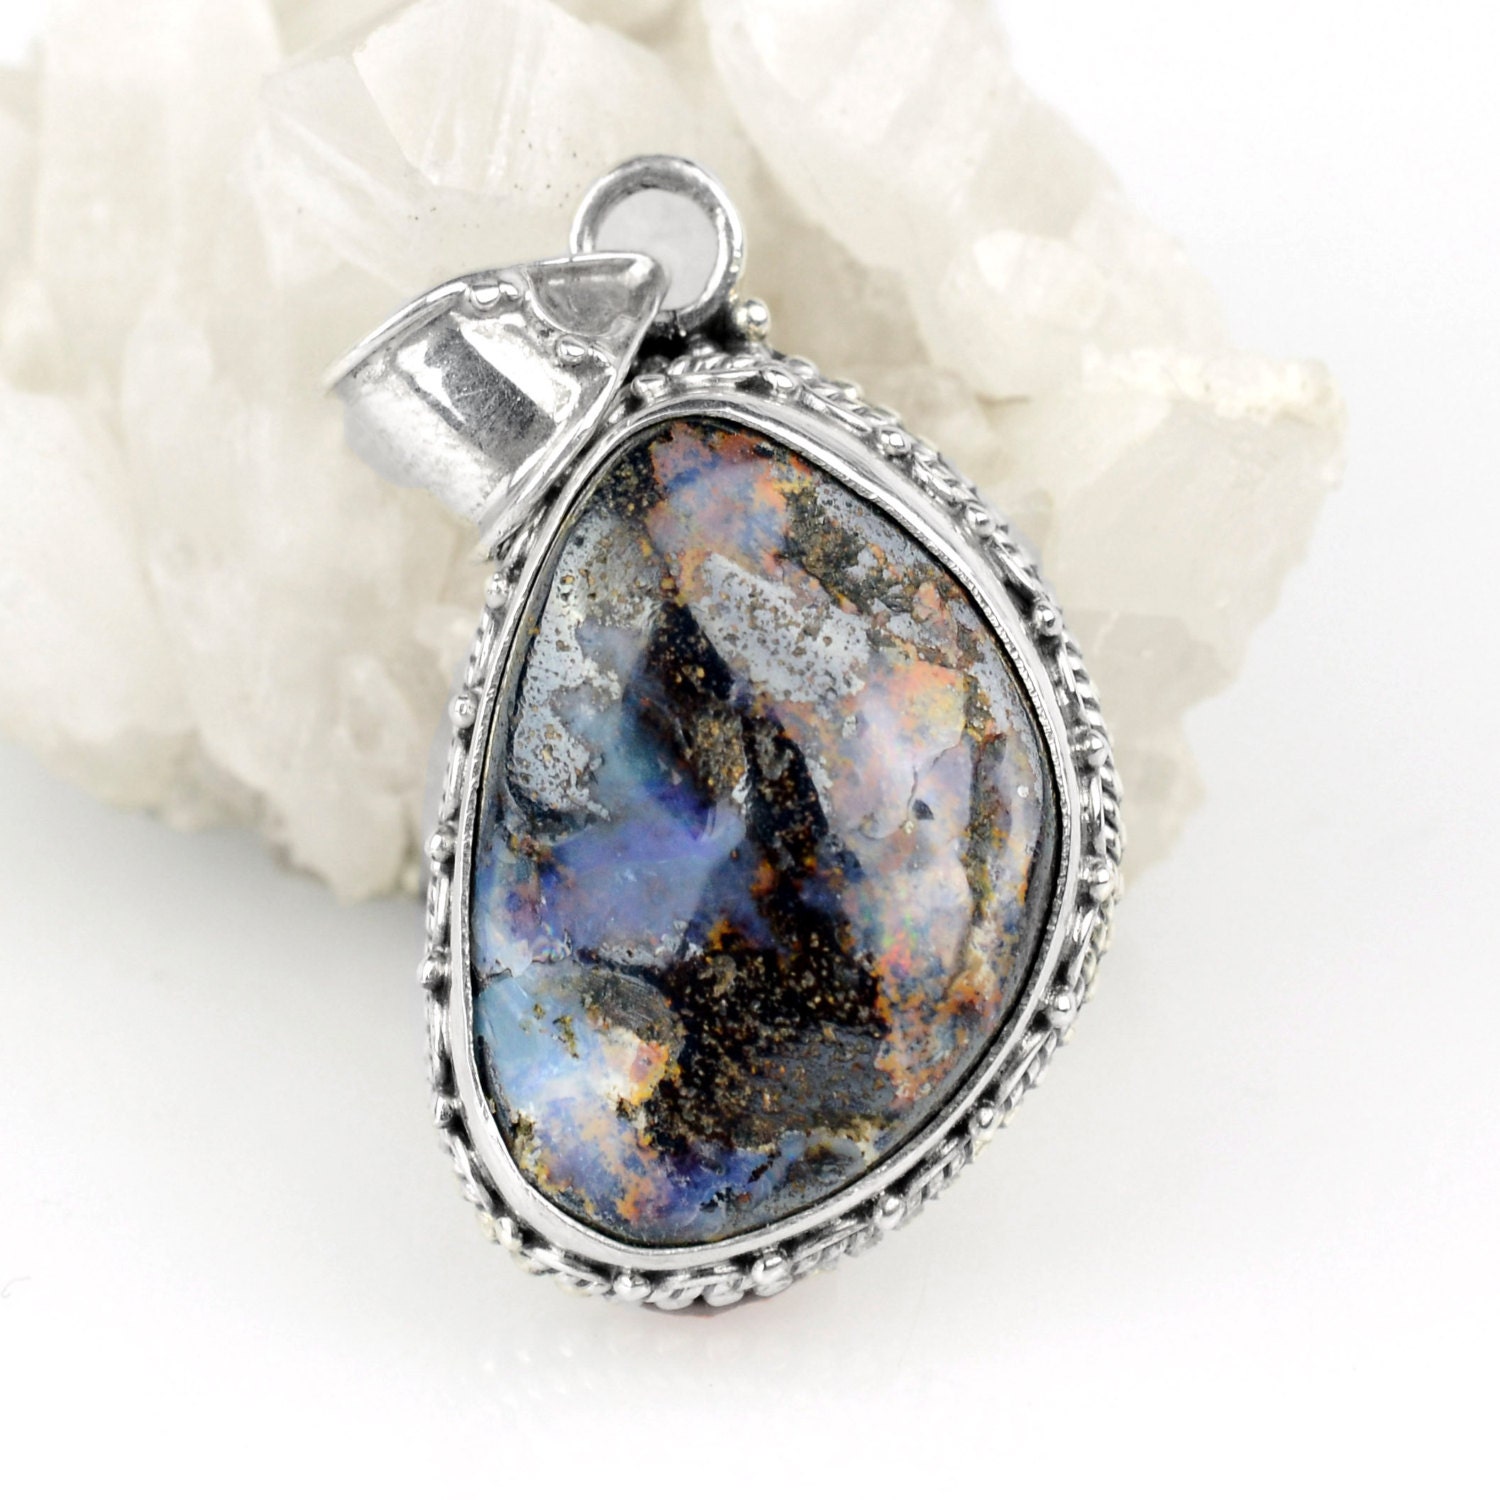 Rare Rainbow Boulder Opal Pendant Necklace Healing Stone